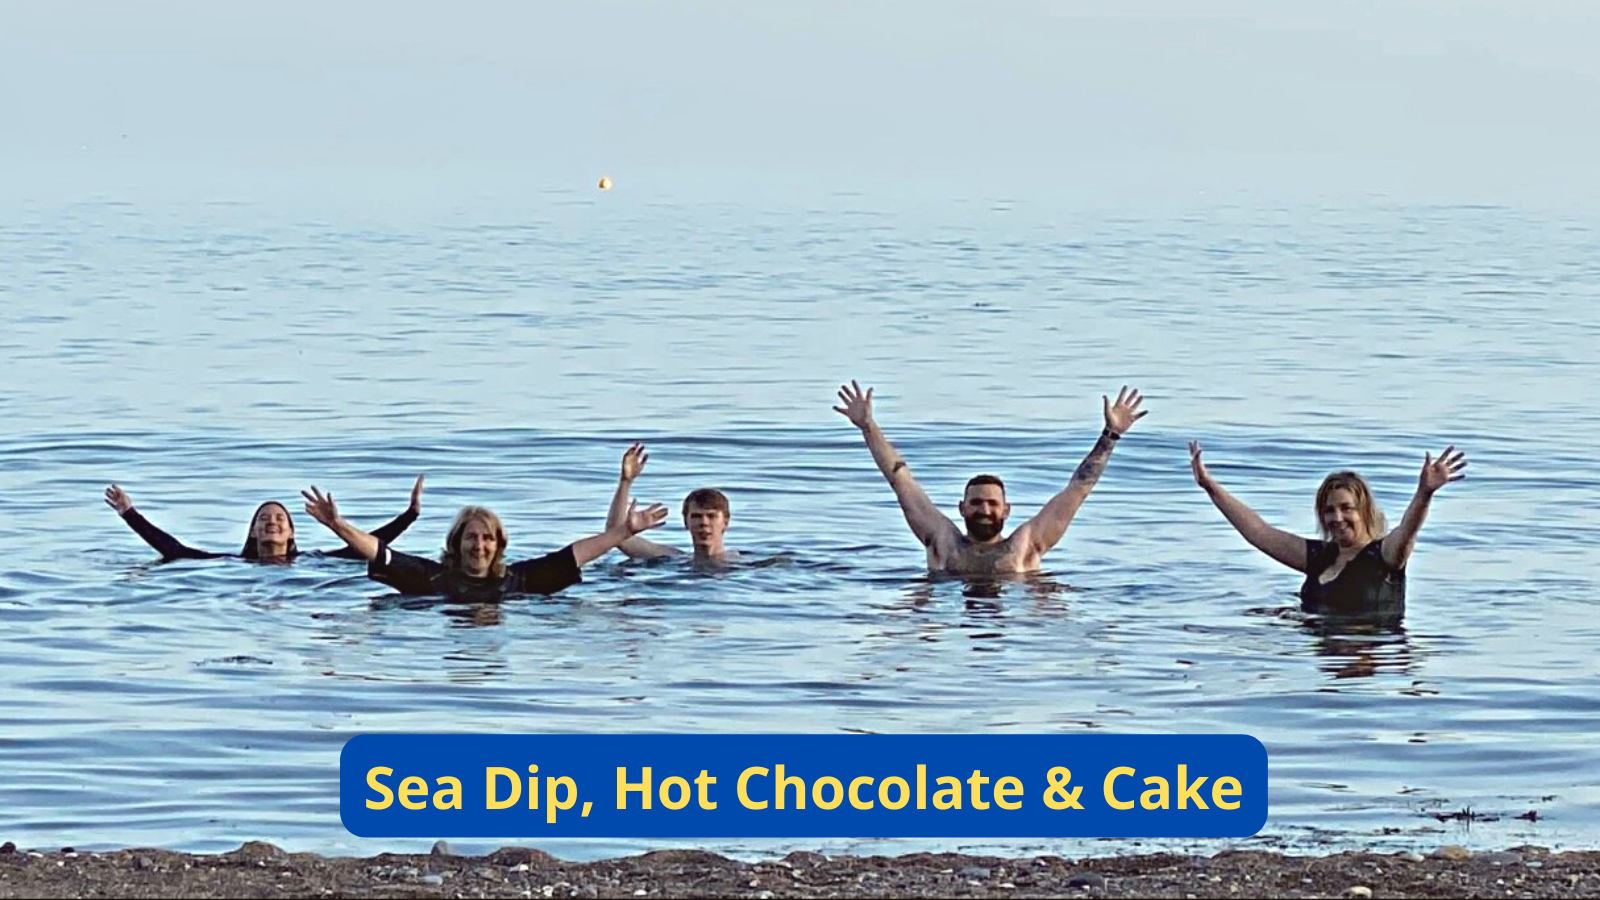 Sea dip, hot chocolate and cake